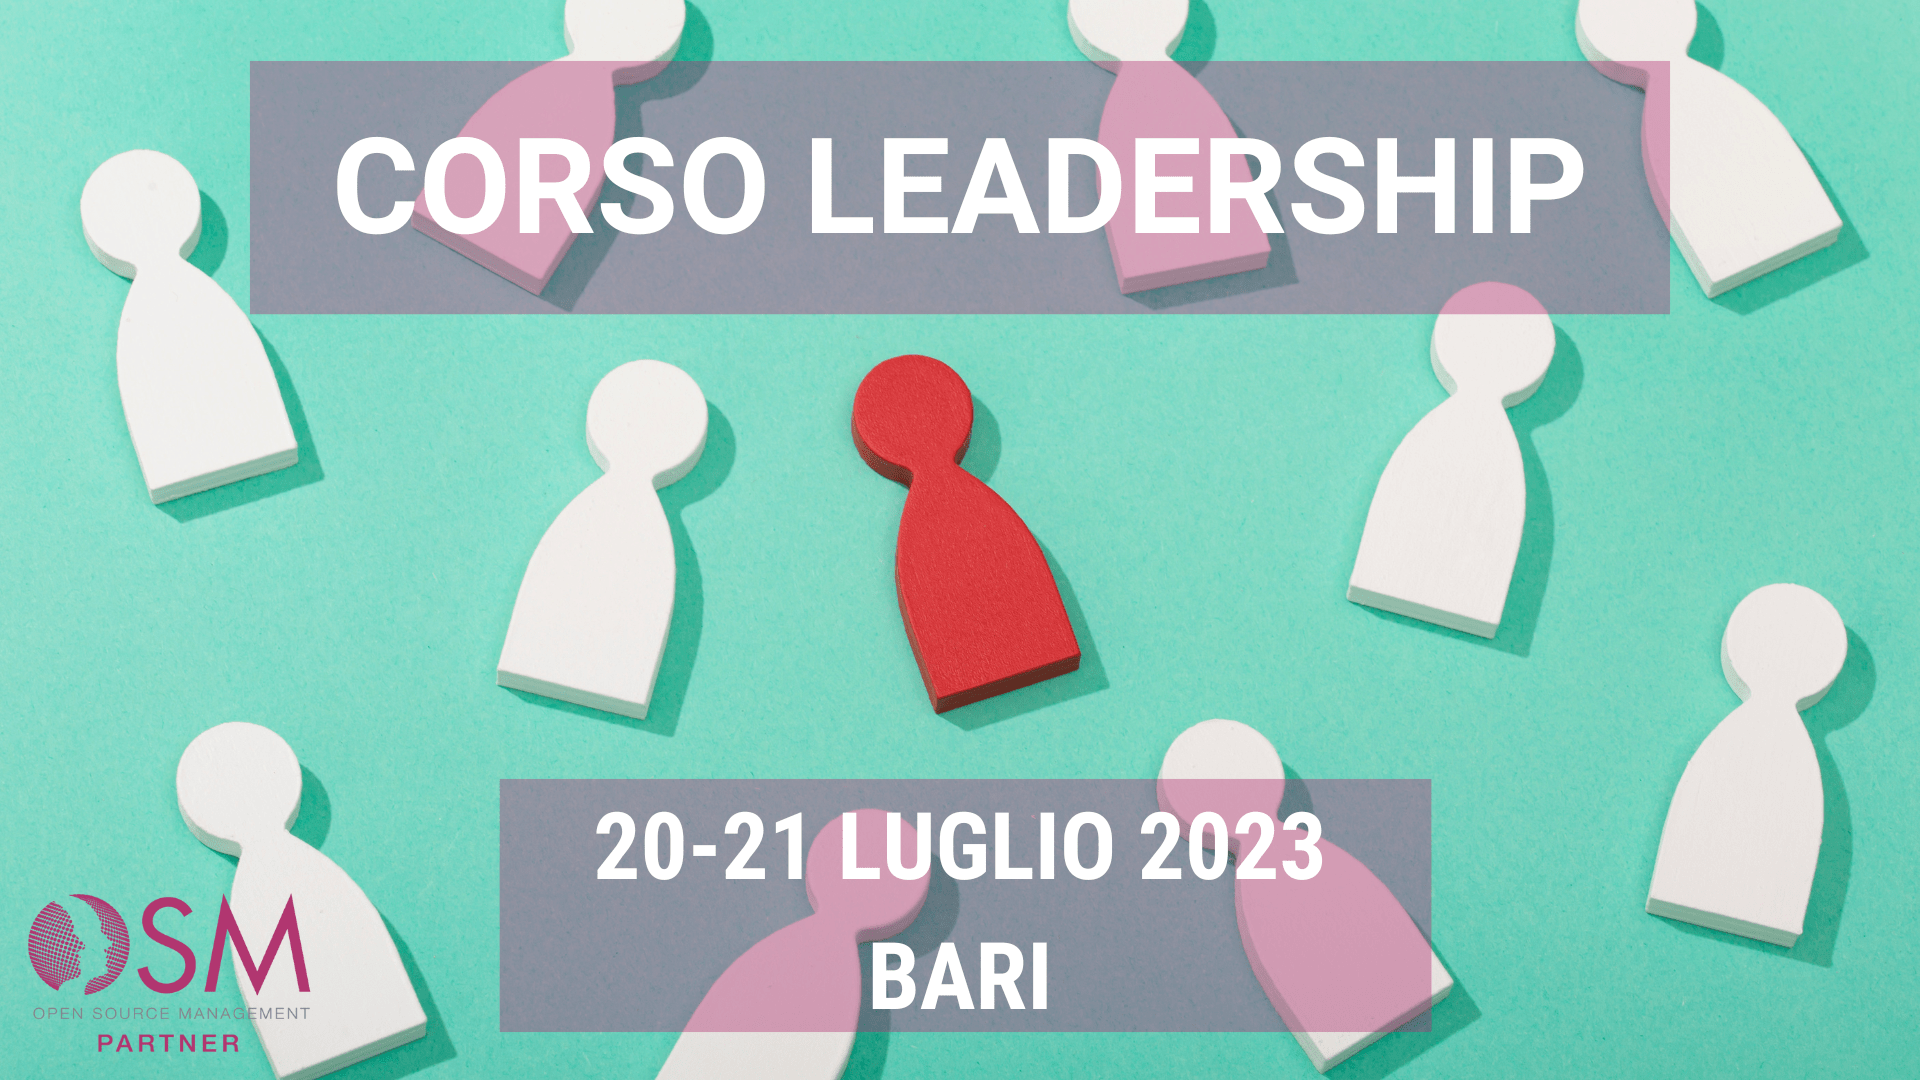 Corso Leadership